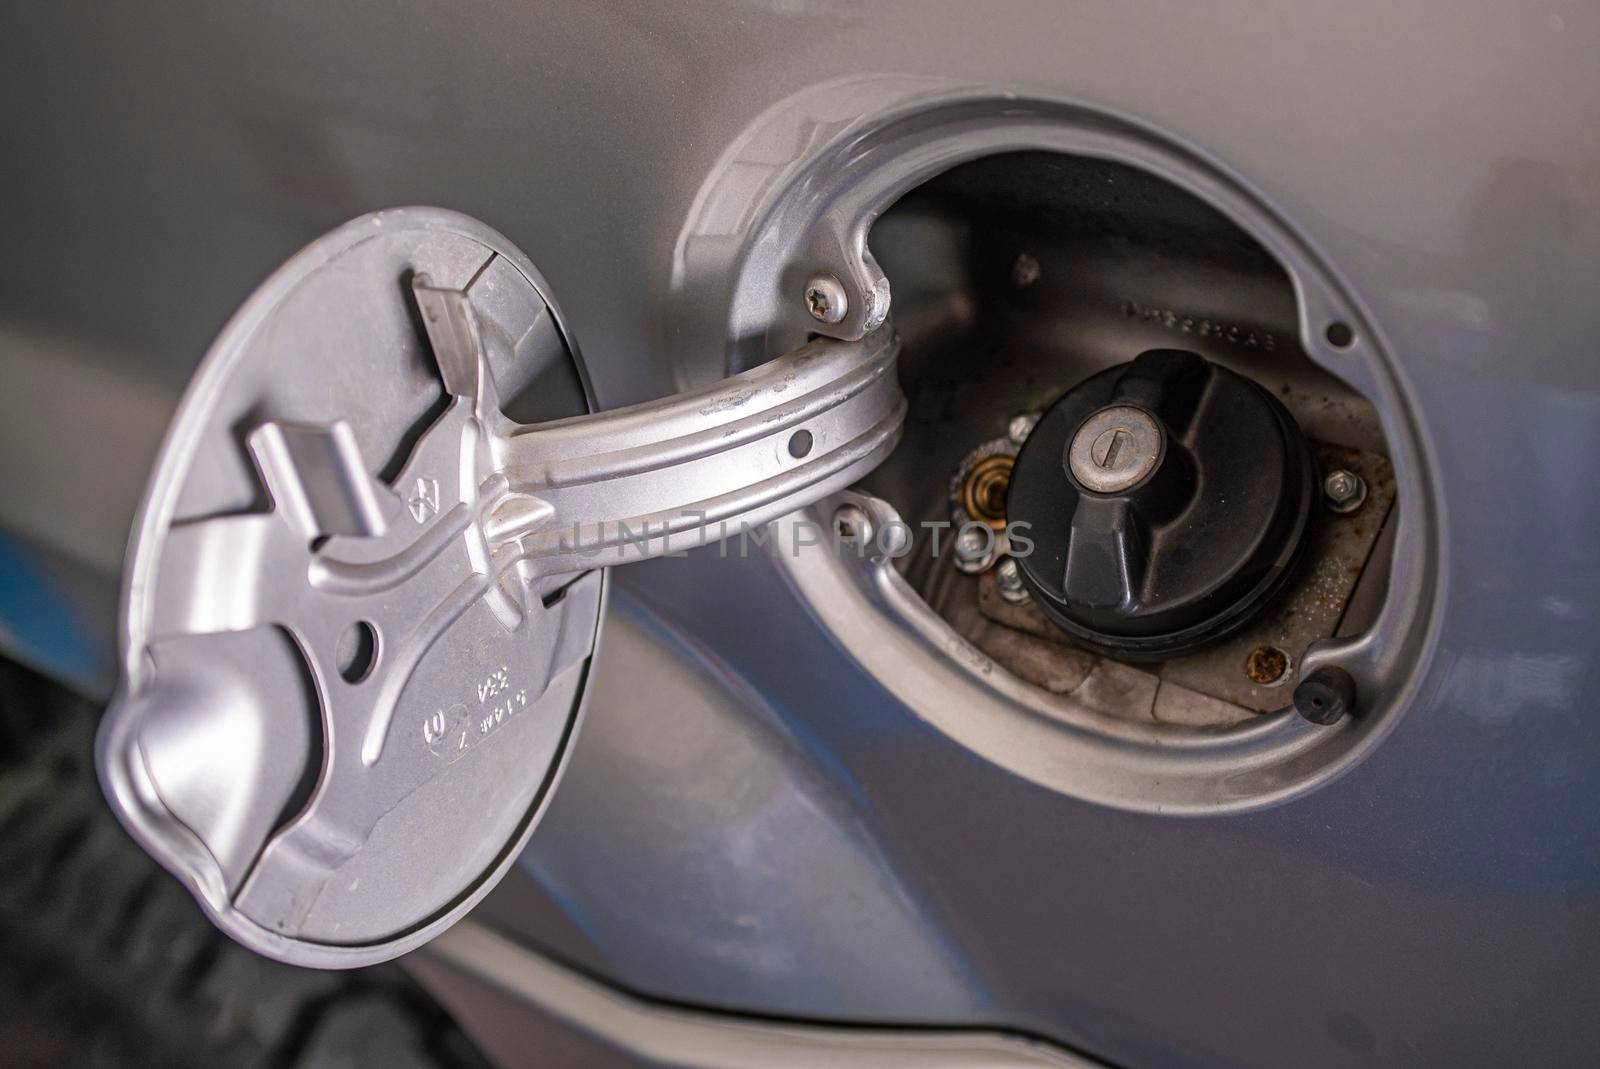 Car fuel door detail opened for refuelling